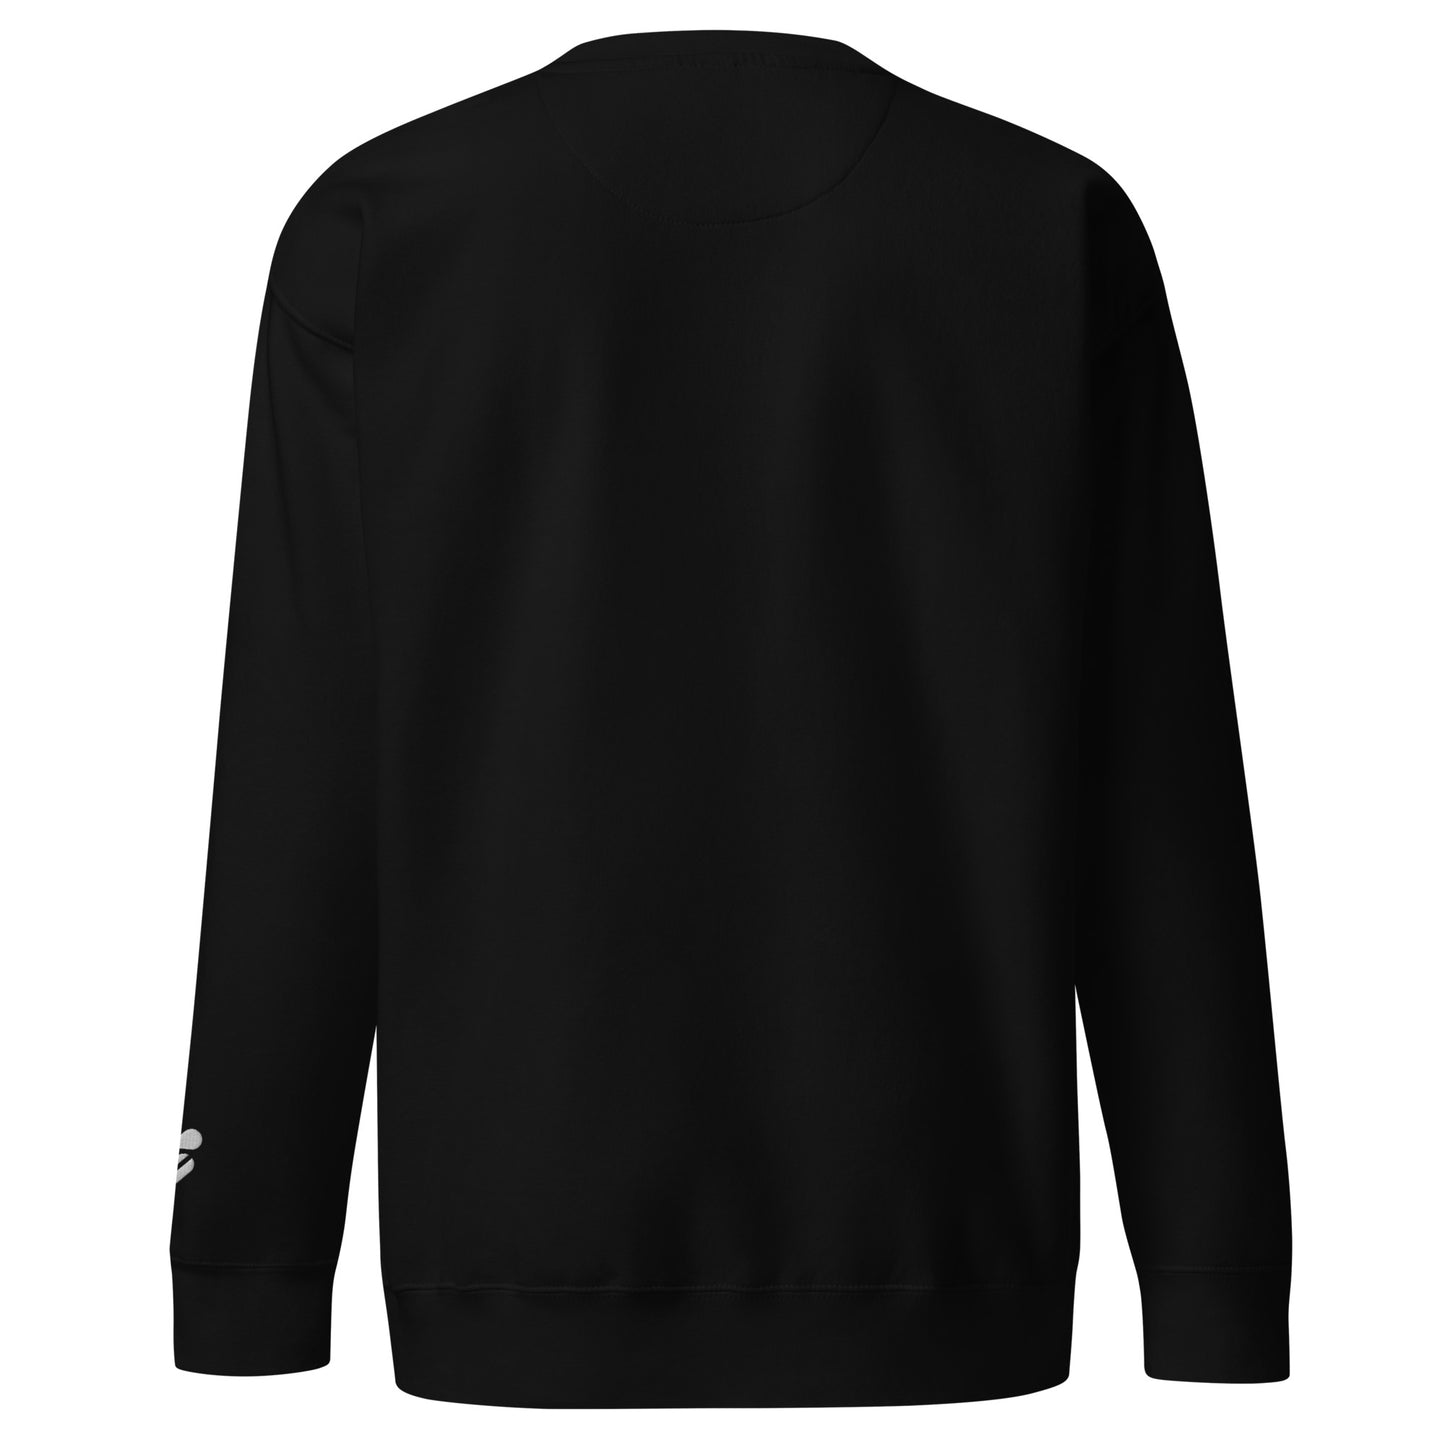 SOULSKY Classic Crew Sweatshirt - Black